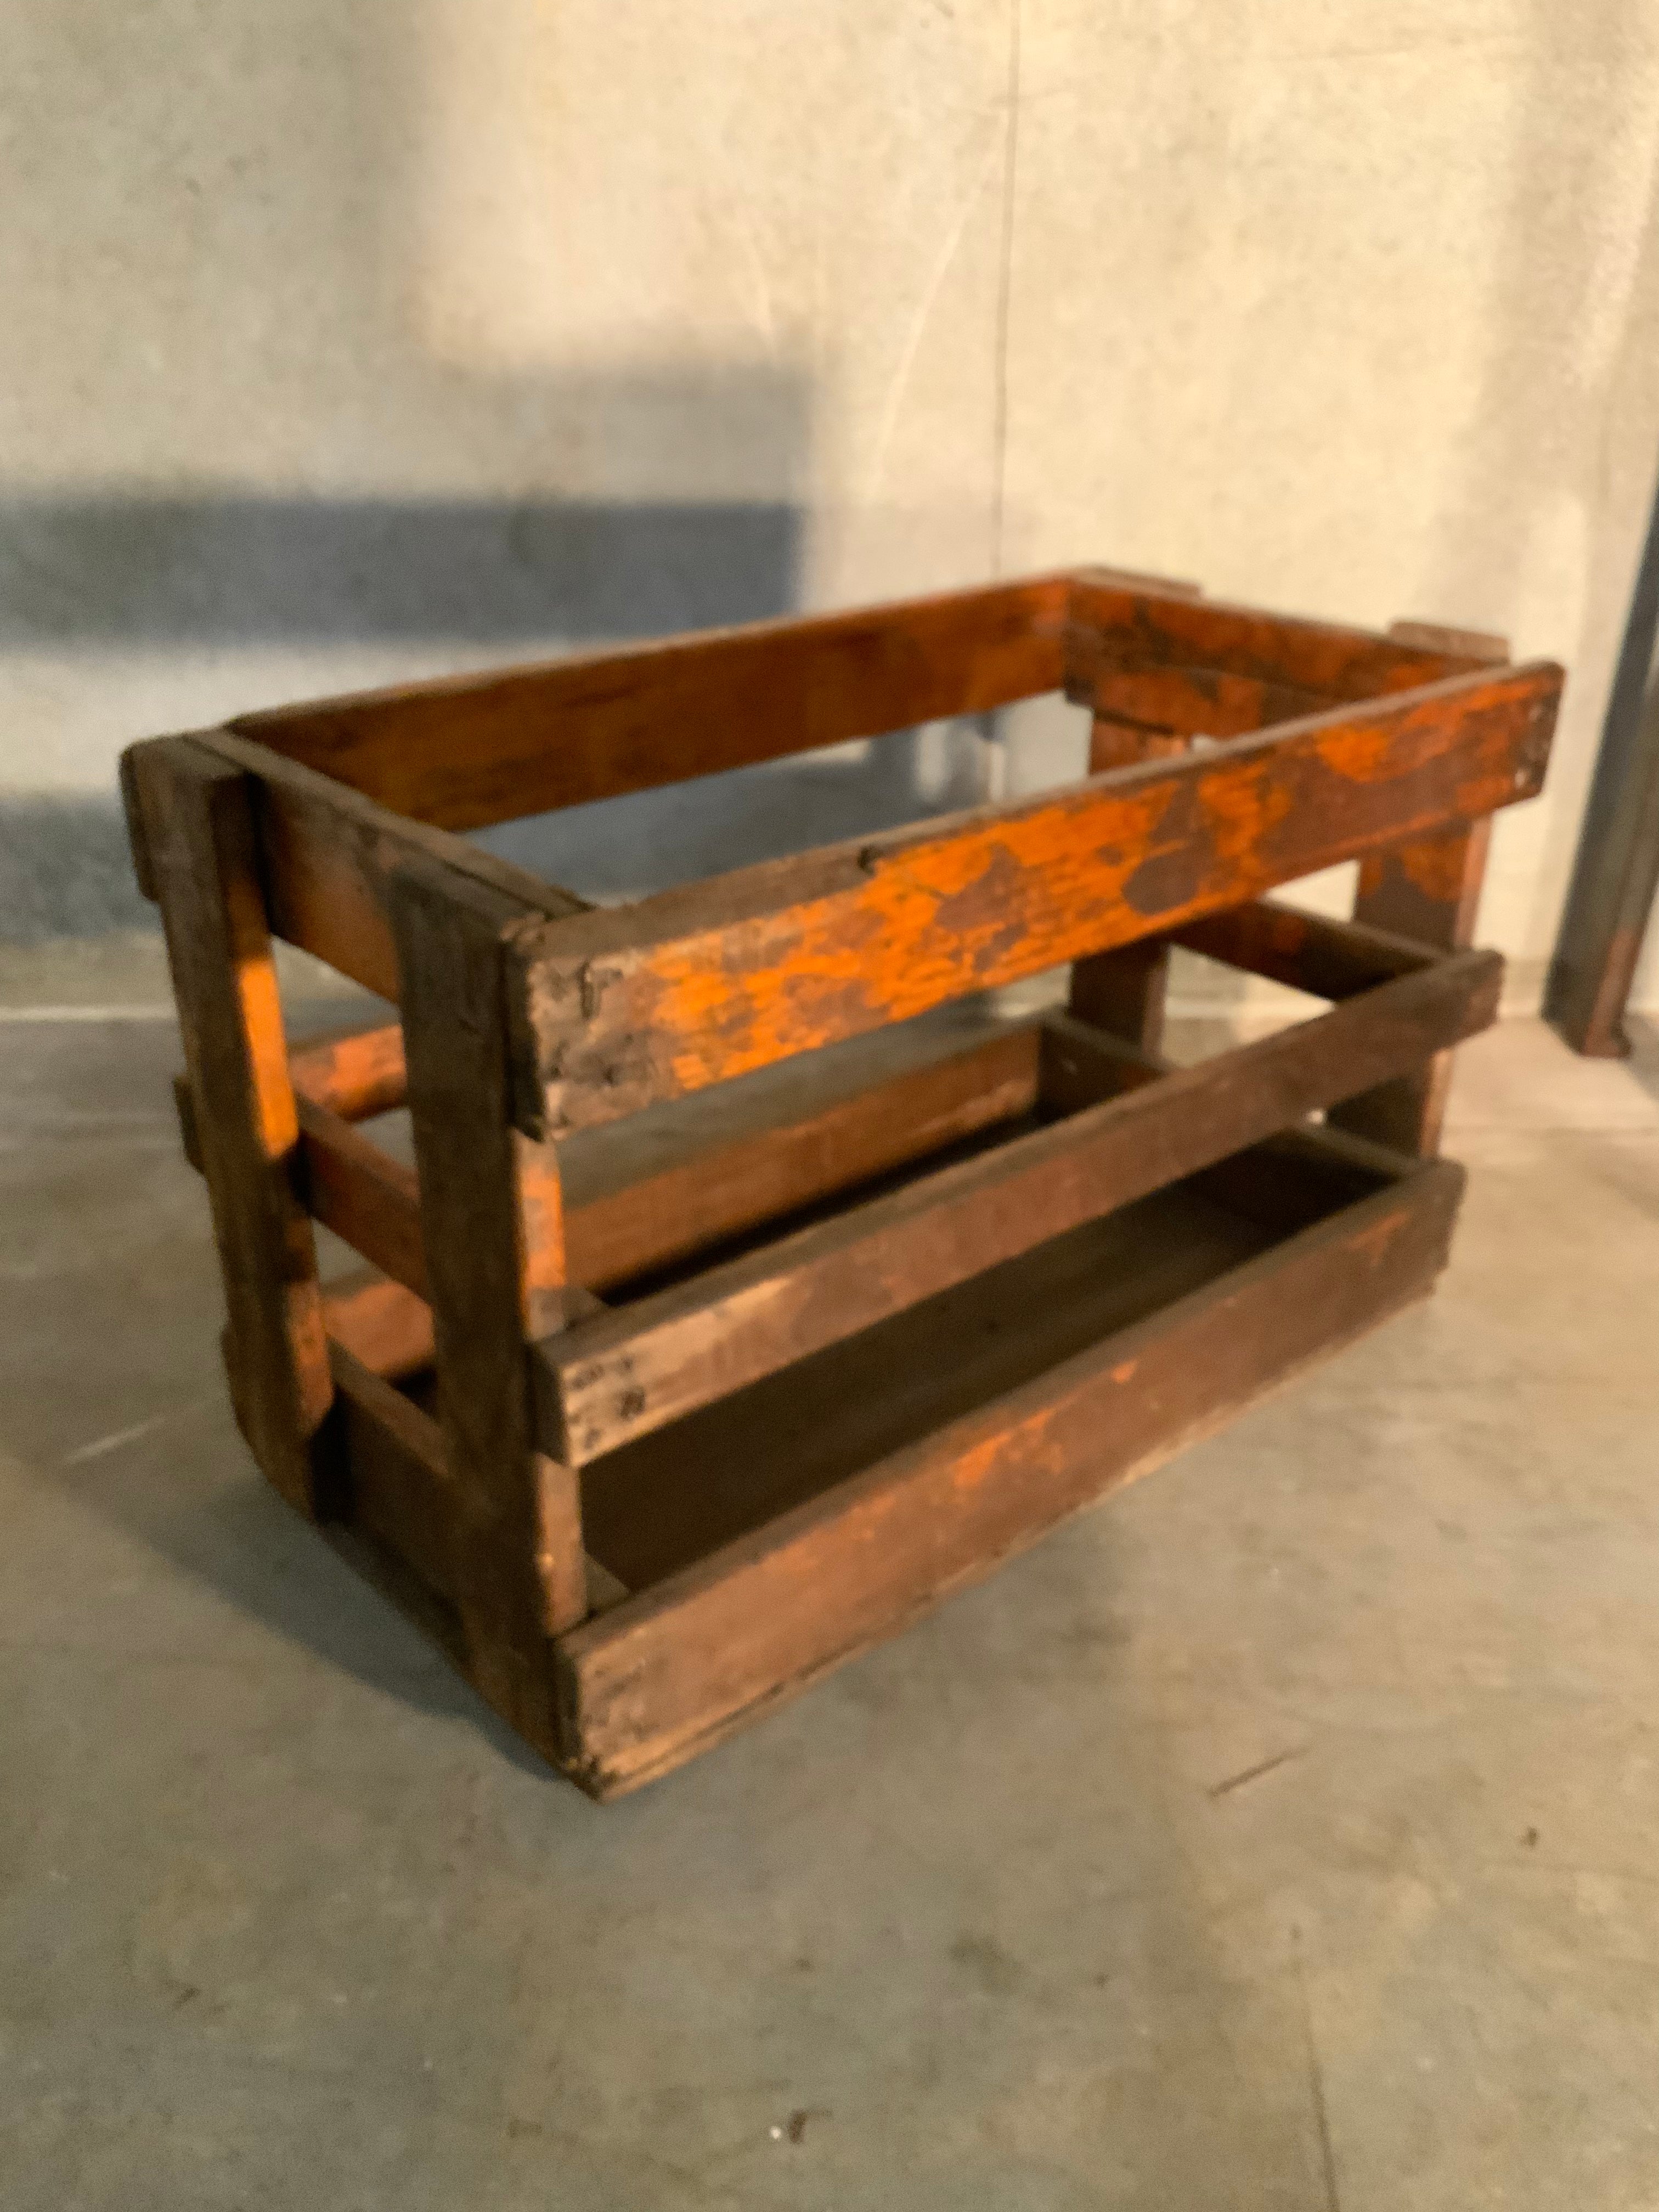 Antique solid wood crate | Scott Landon Antiques and Interiors.